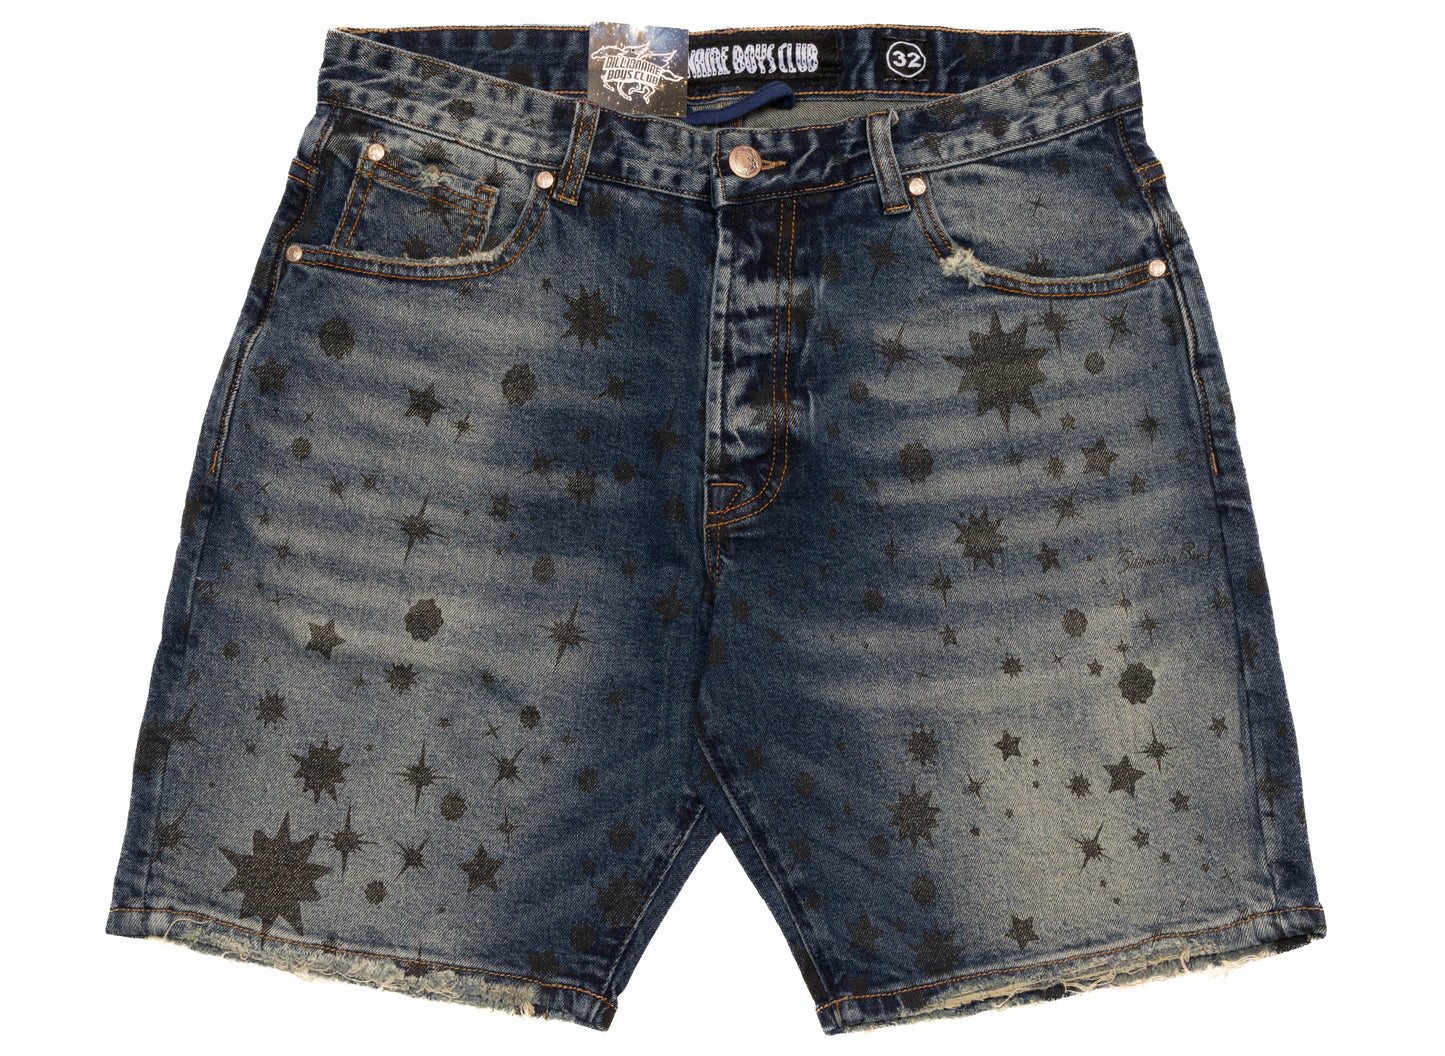 BBC Starfield Jeans Shorts